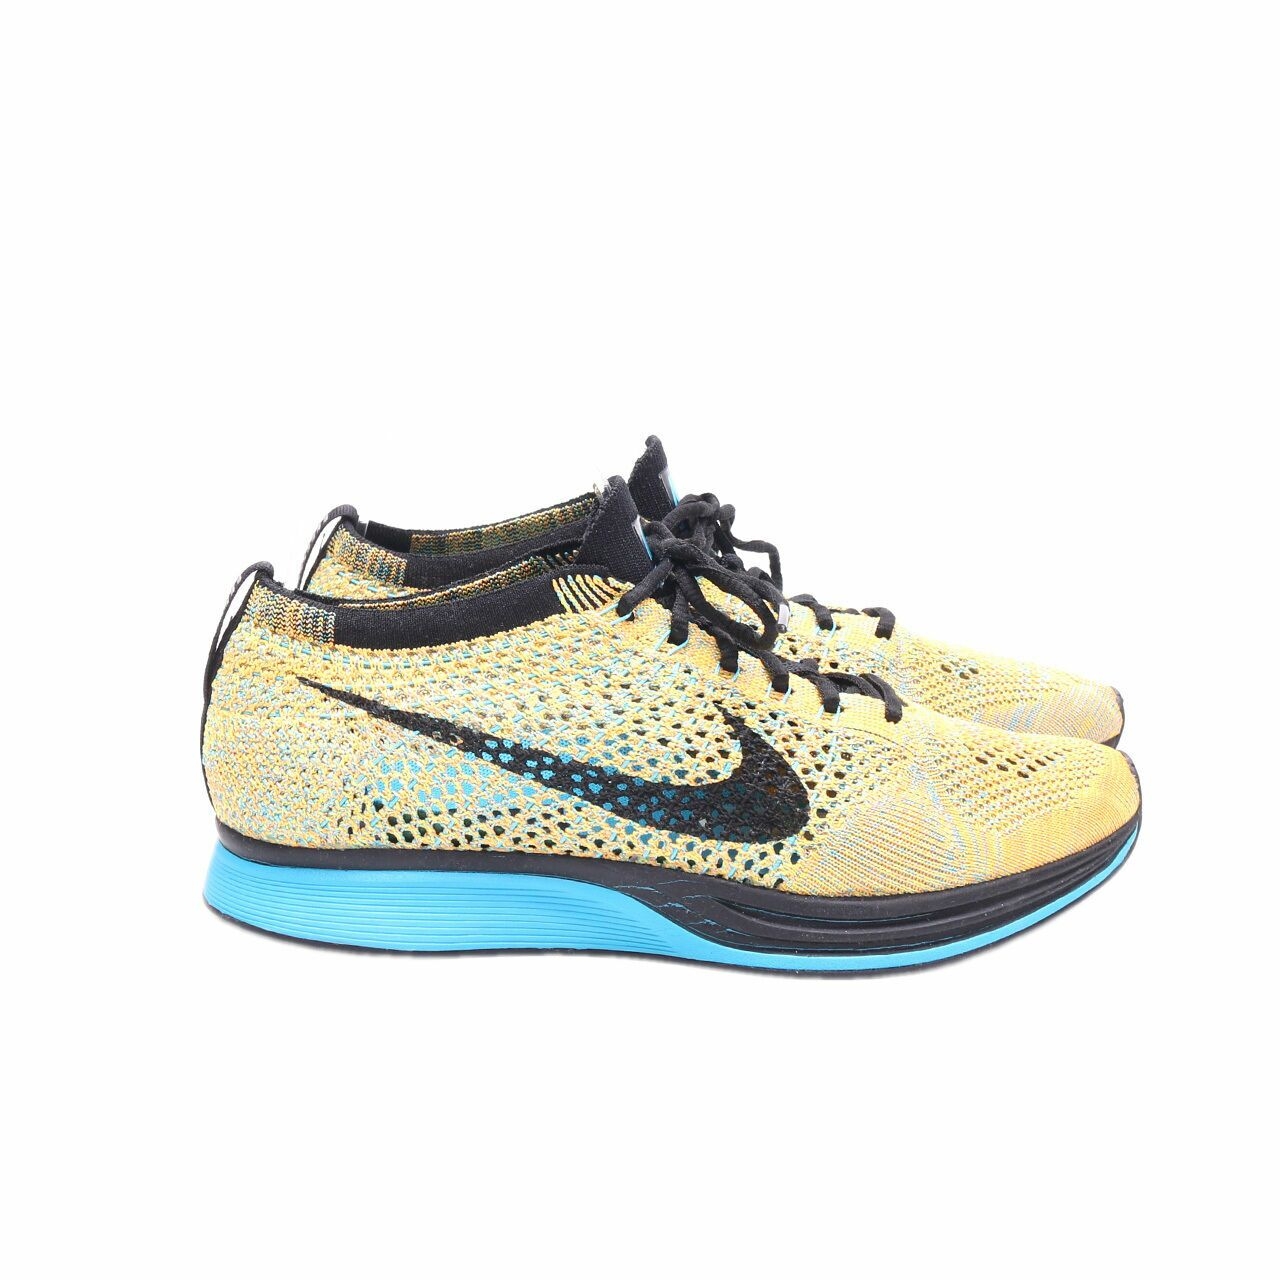 Nike Flyknit Racer Bright Citrus – Blue Lagoon Sneakers